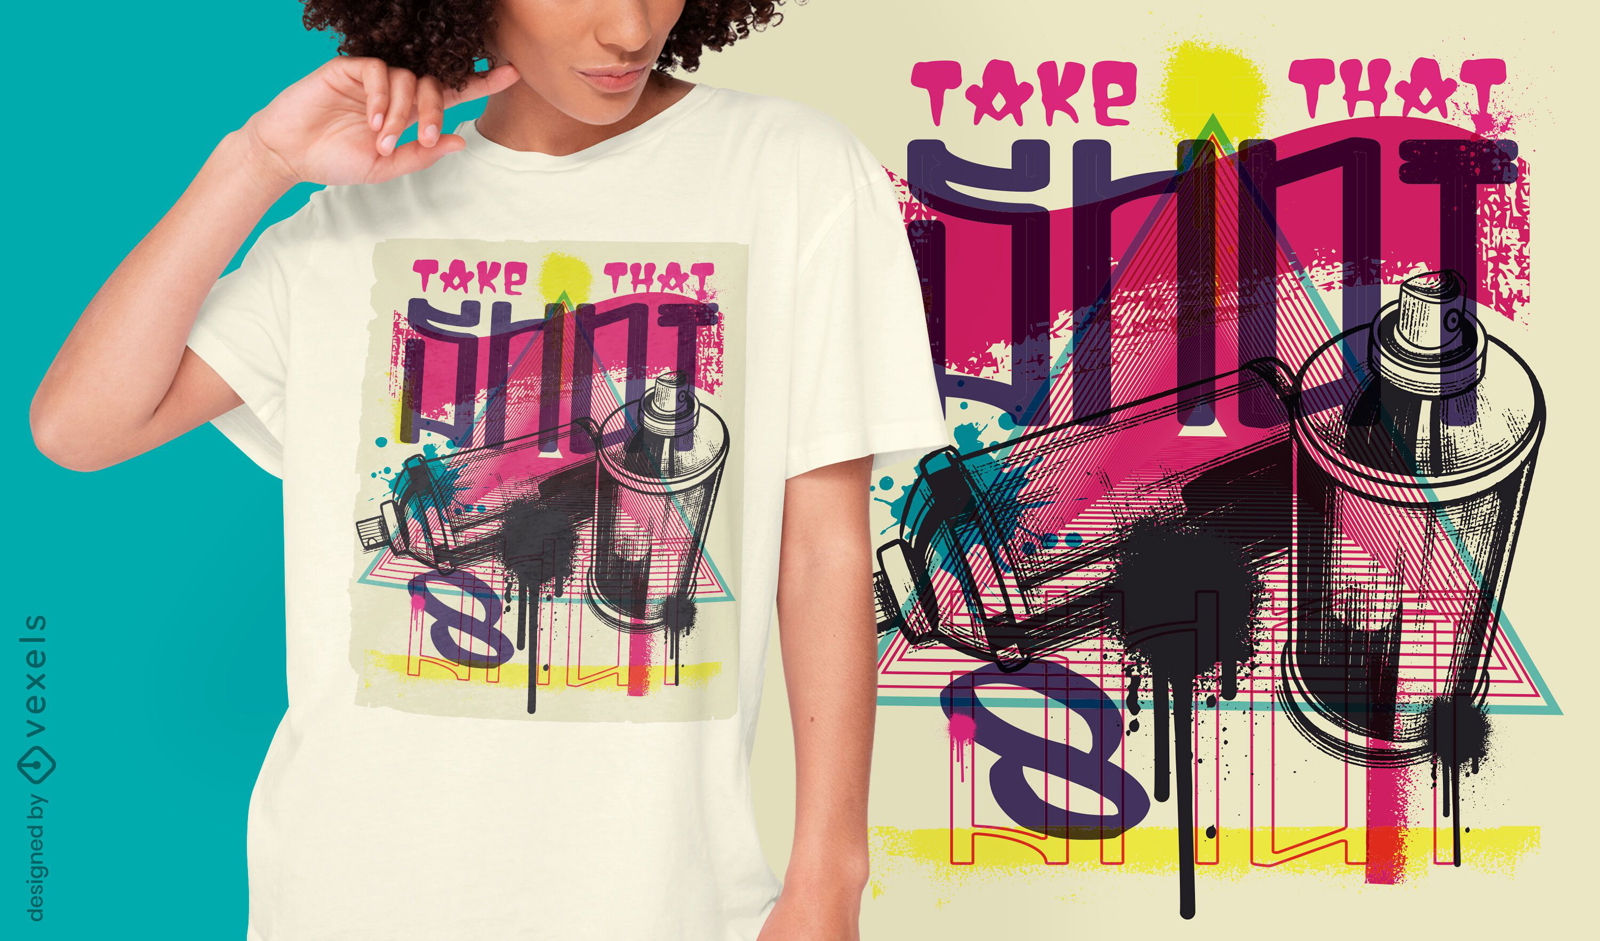 Diseño de camiseta de graffiti urbano de pintura en aerosol.